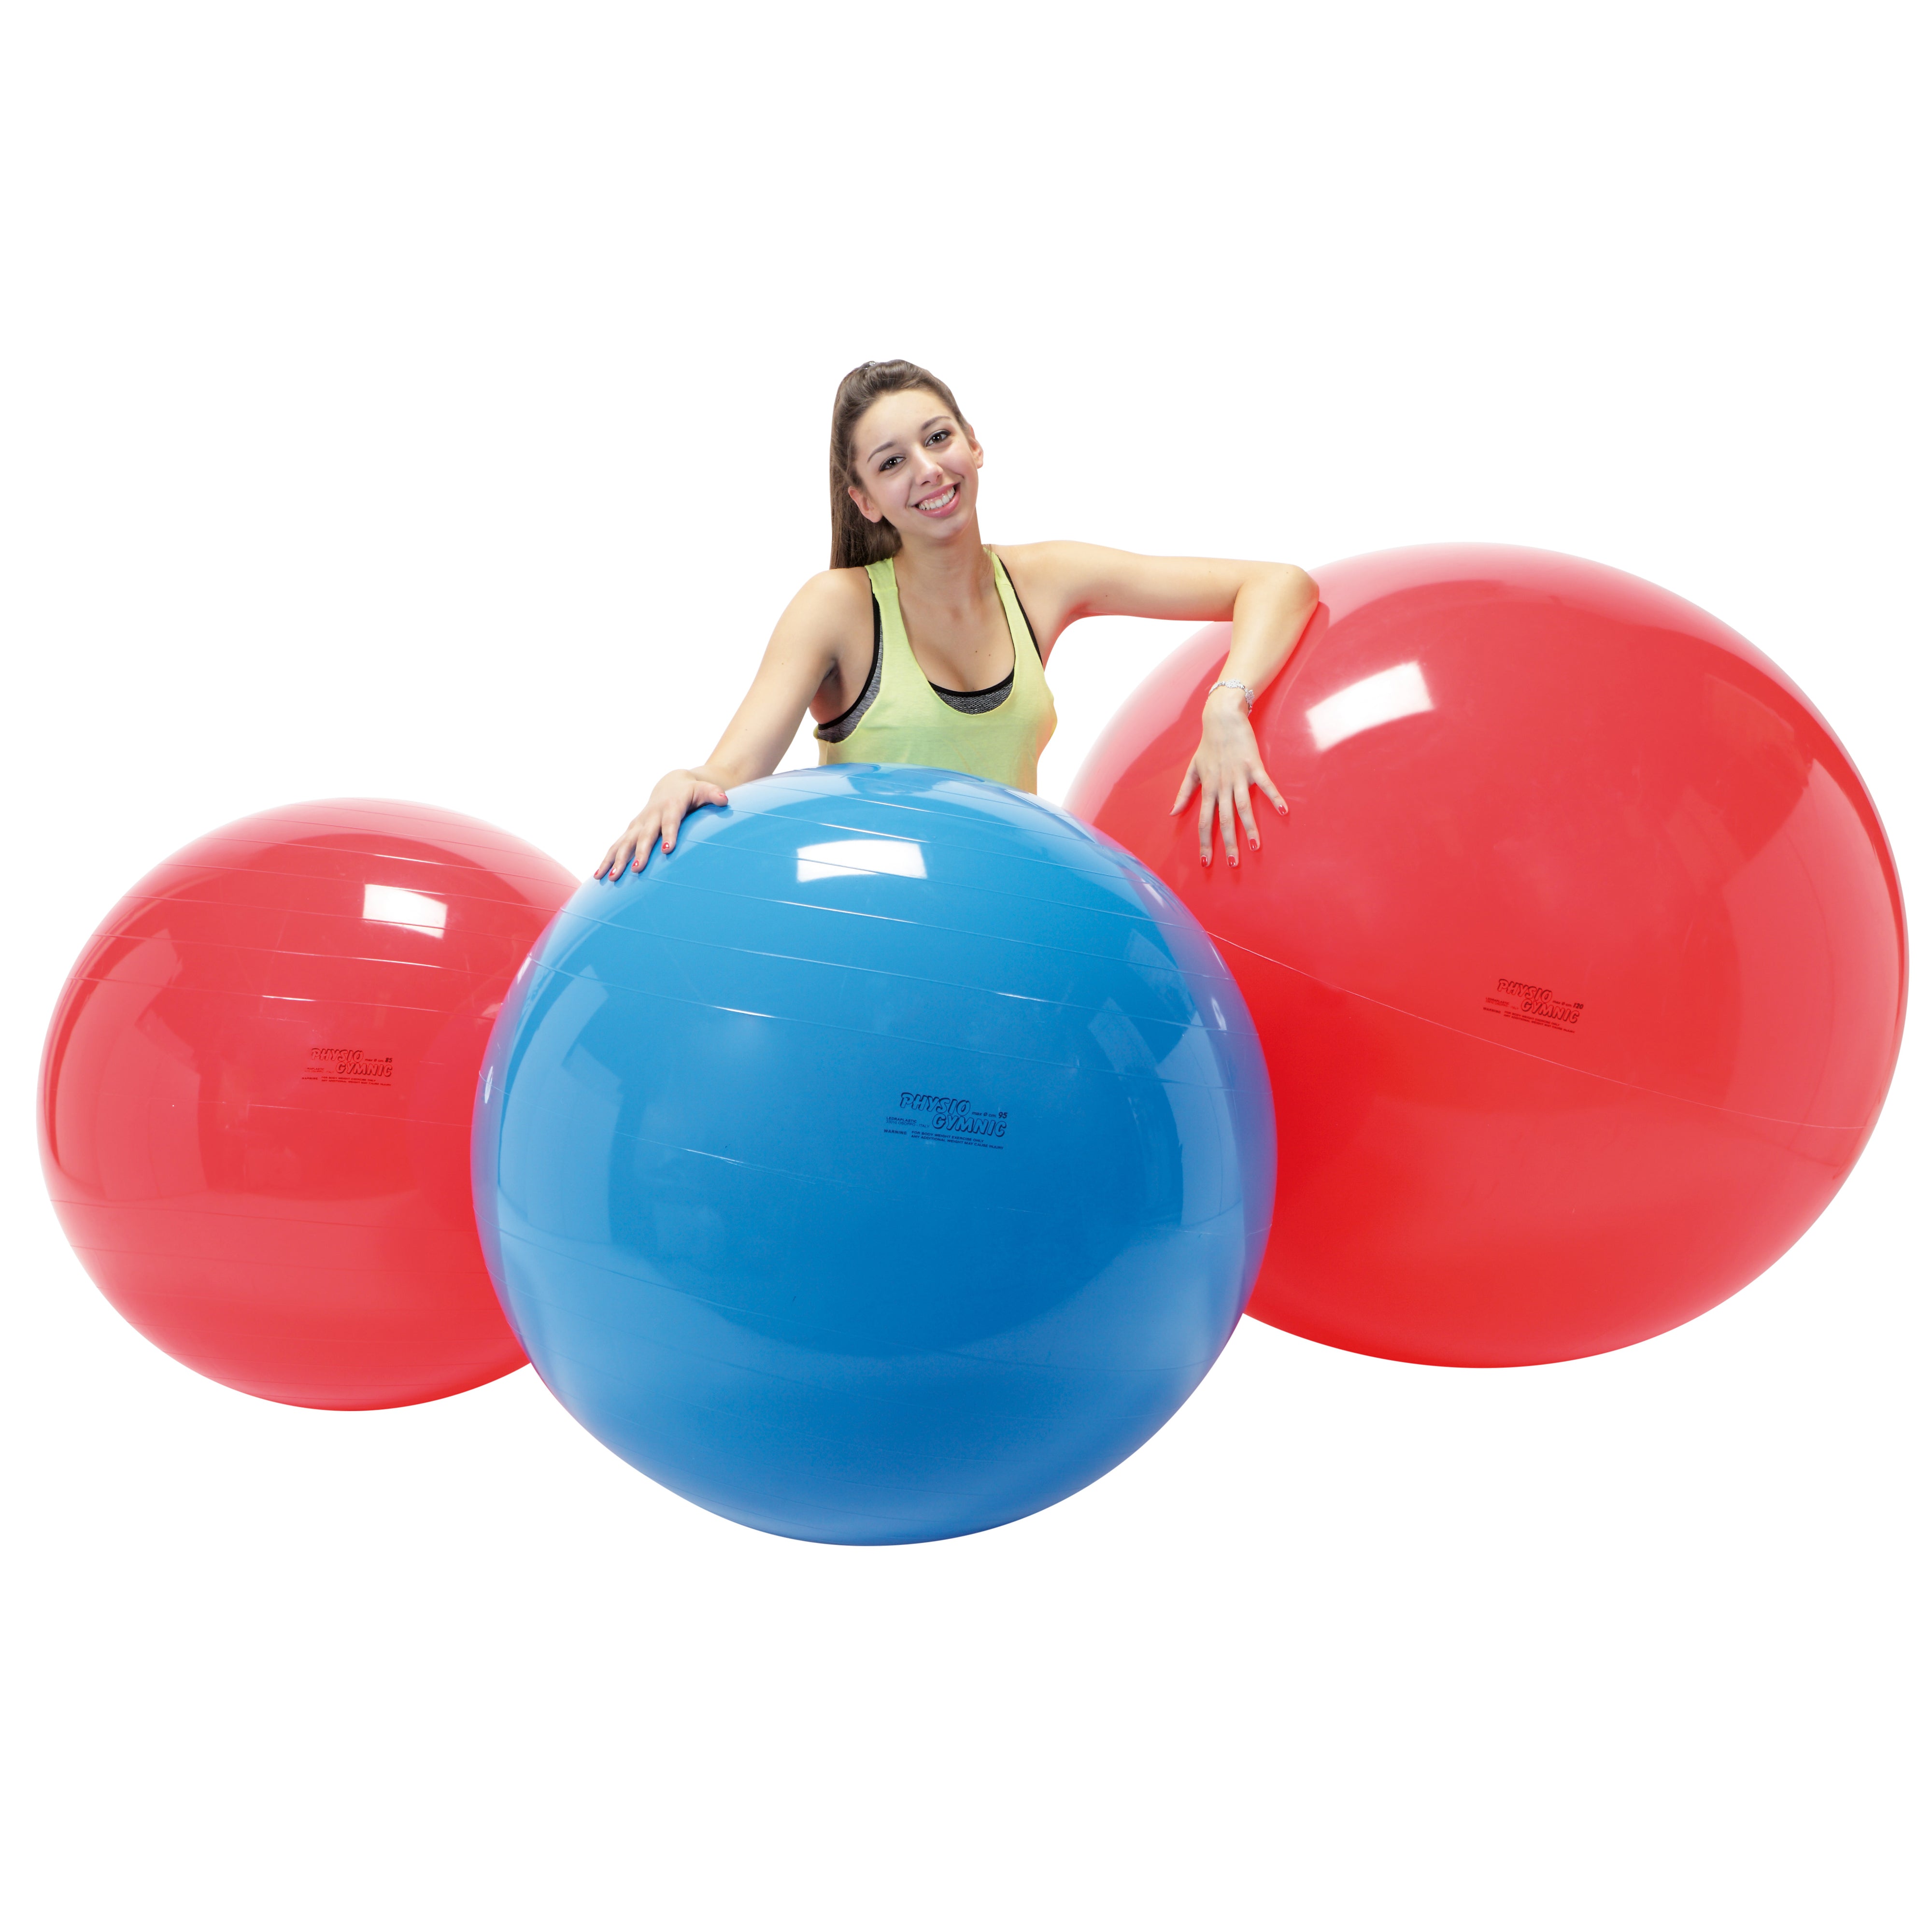 Physio Gymnic Balls